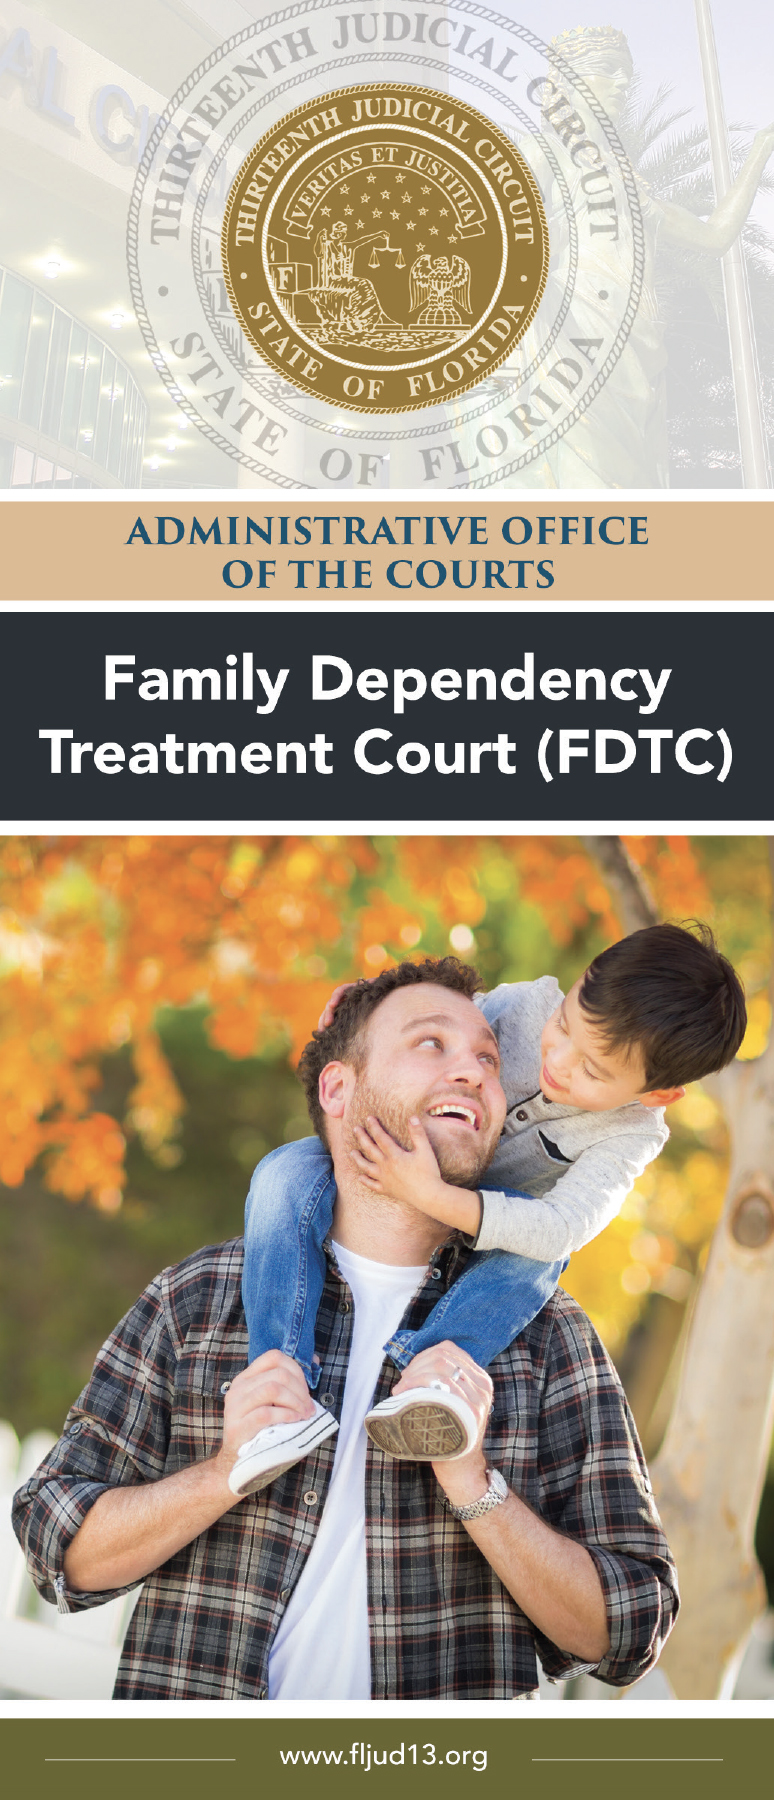 FDTC Brochure cover